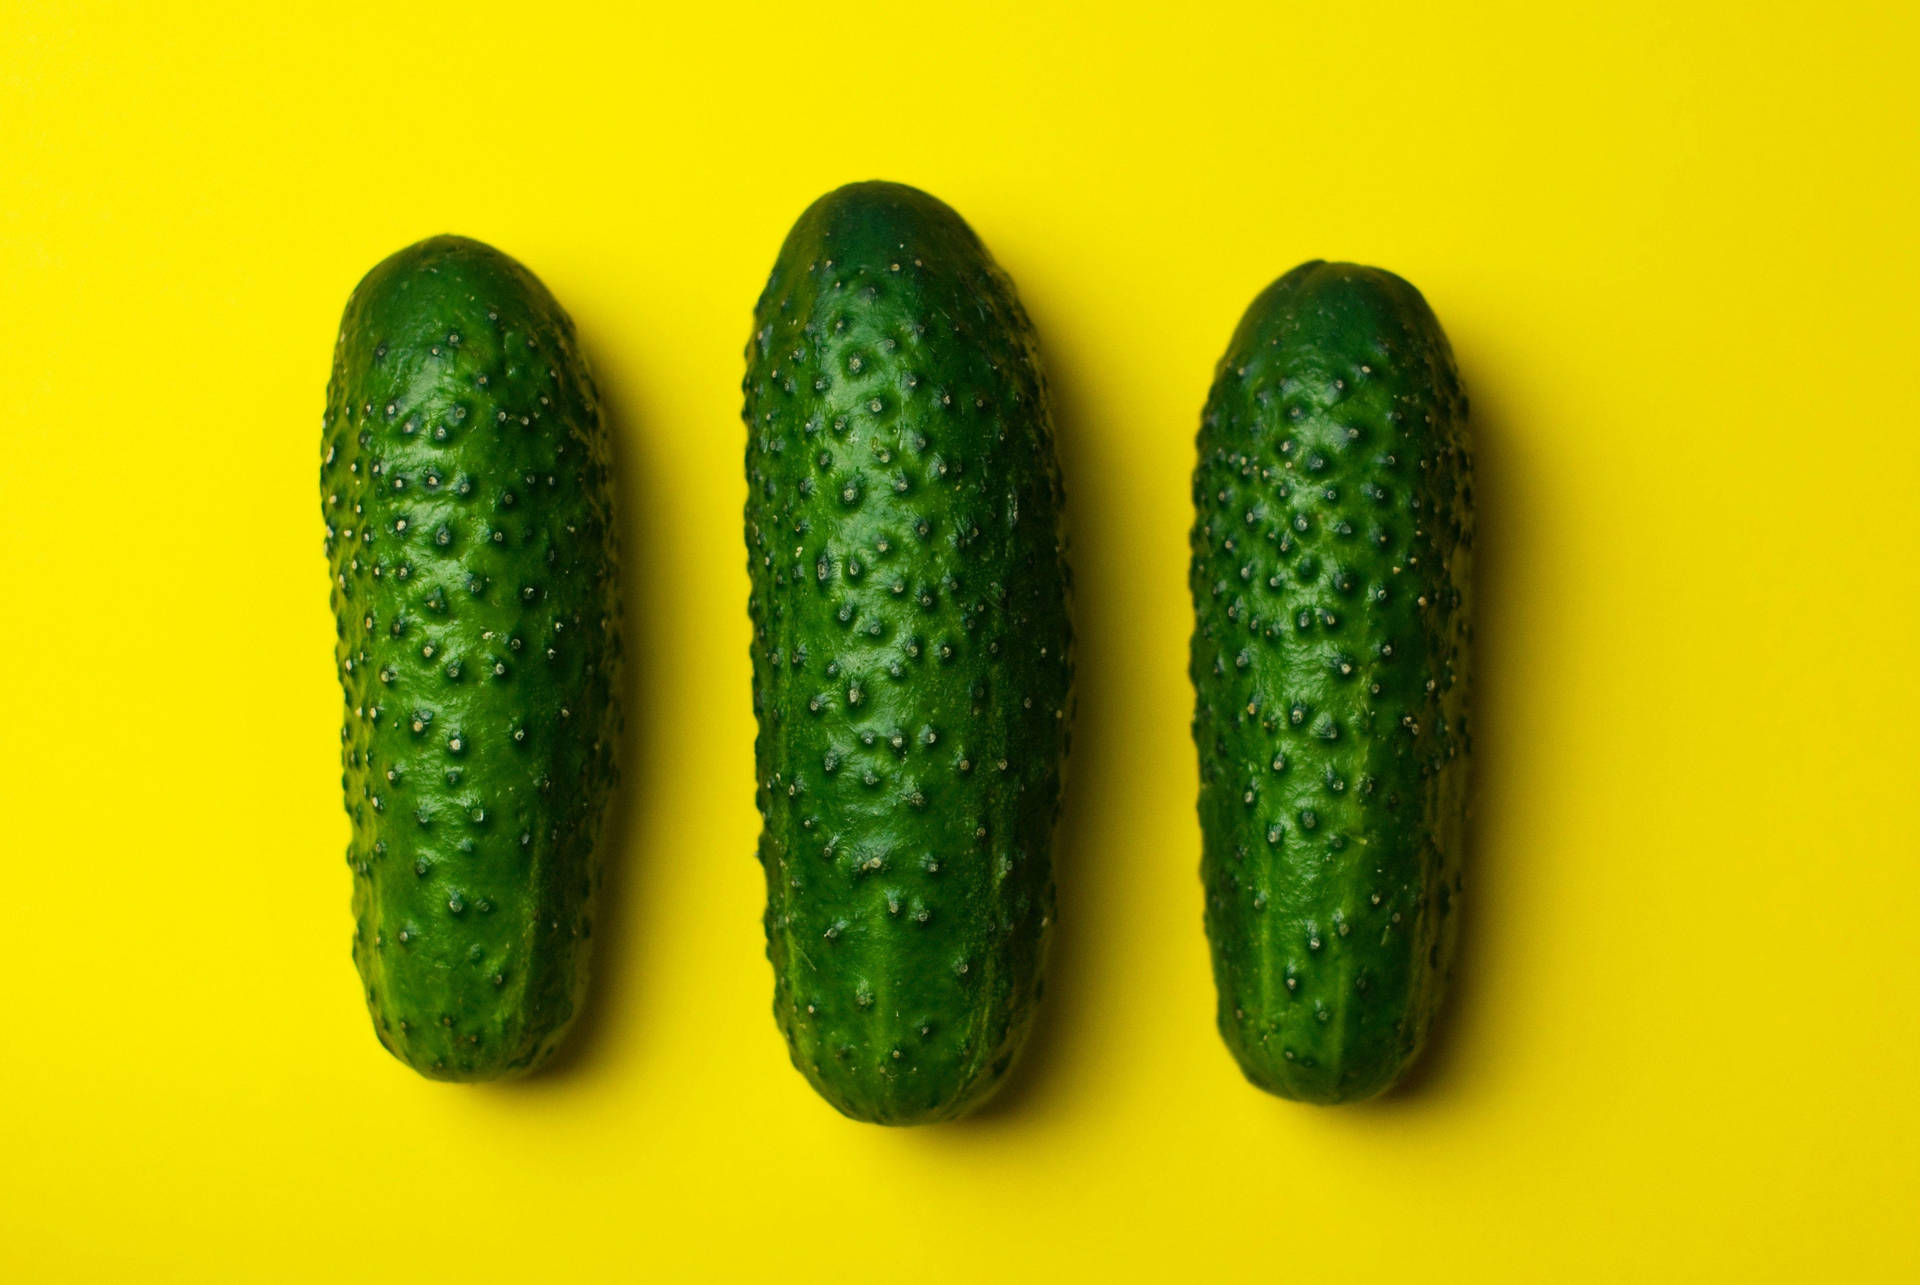 Aesthetic Bumpy Green Cucumber Fruits Wallpaper